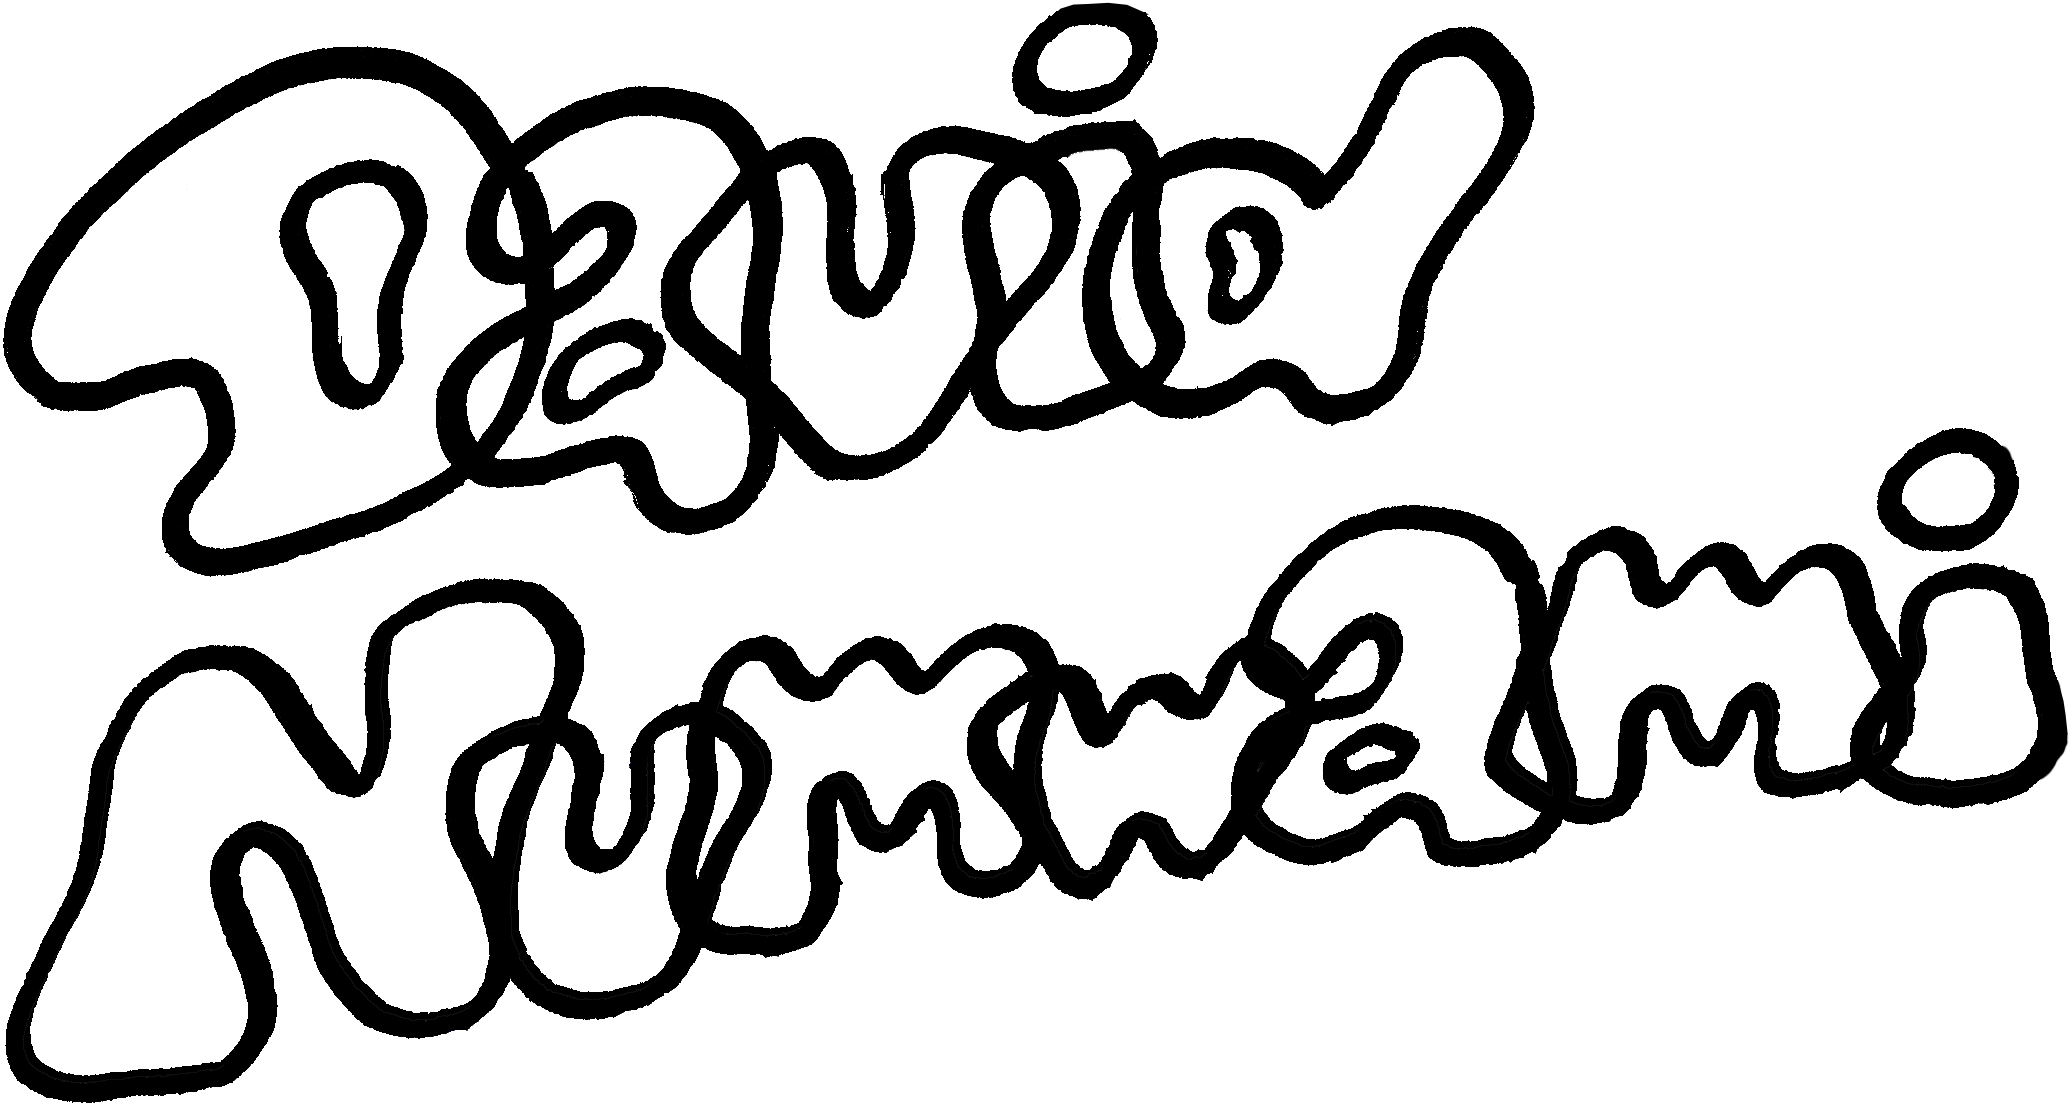 David Numwami's logo which is handwrited.